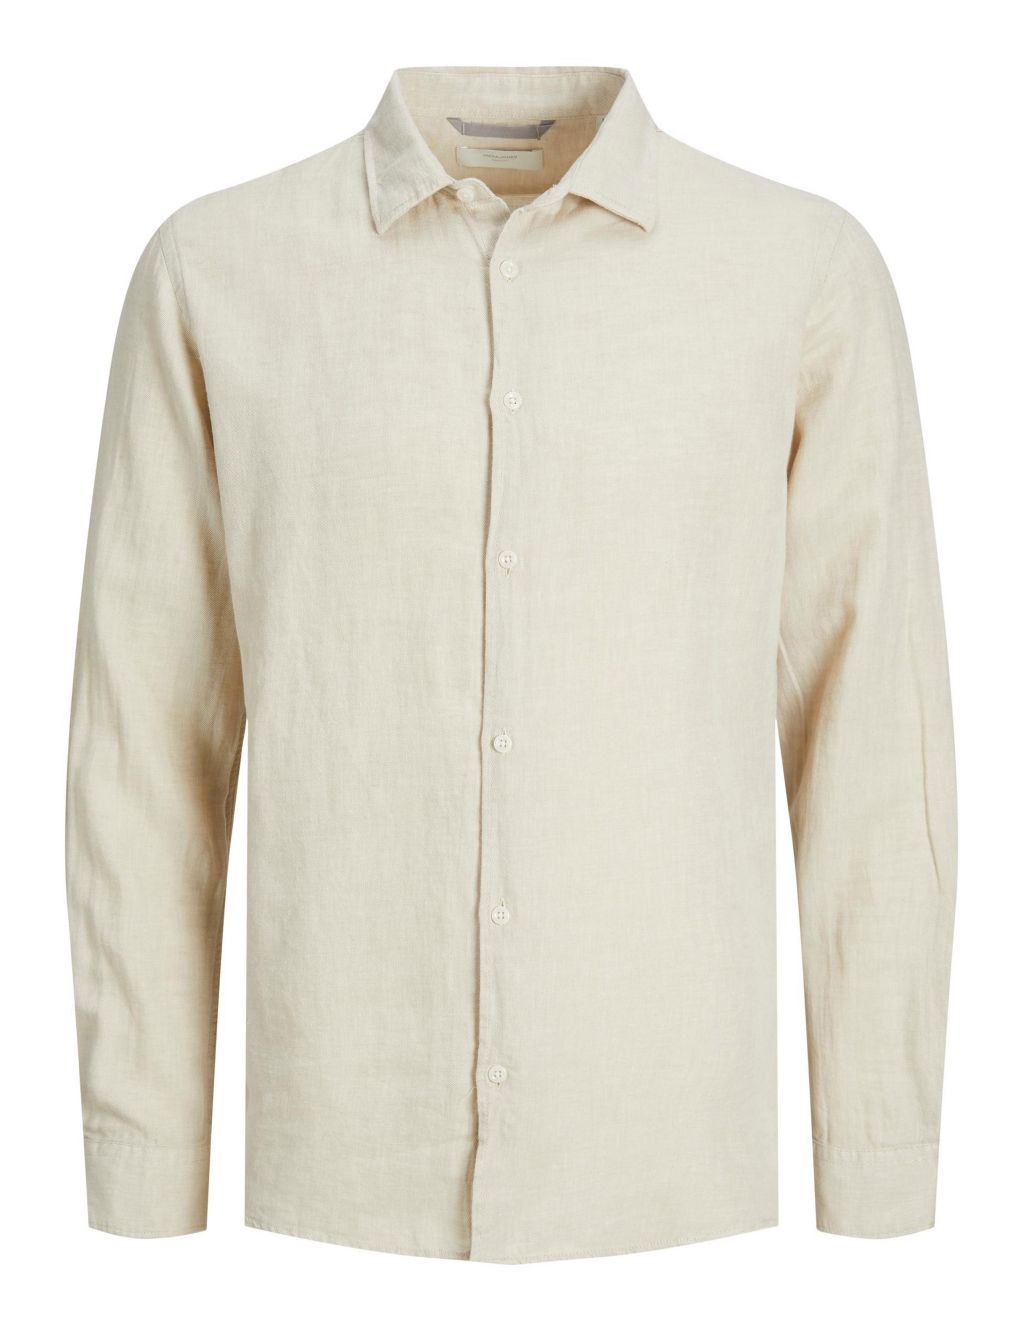 Slim Fit Cotton Blend Oxford Shirt image 1